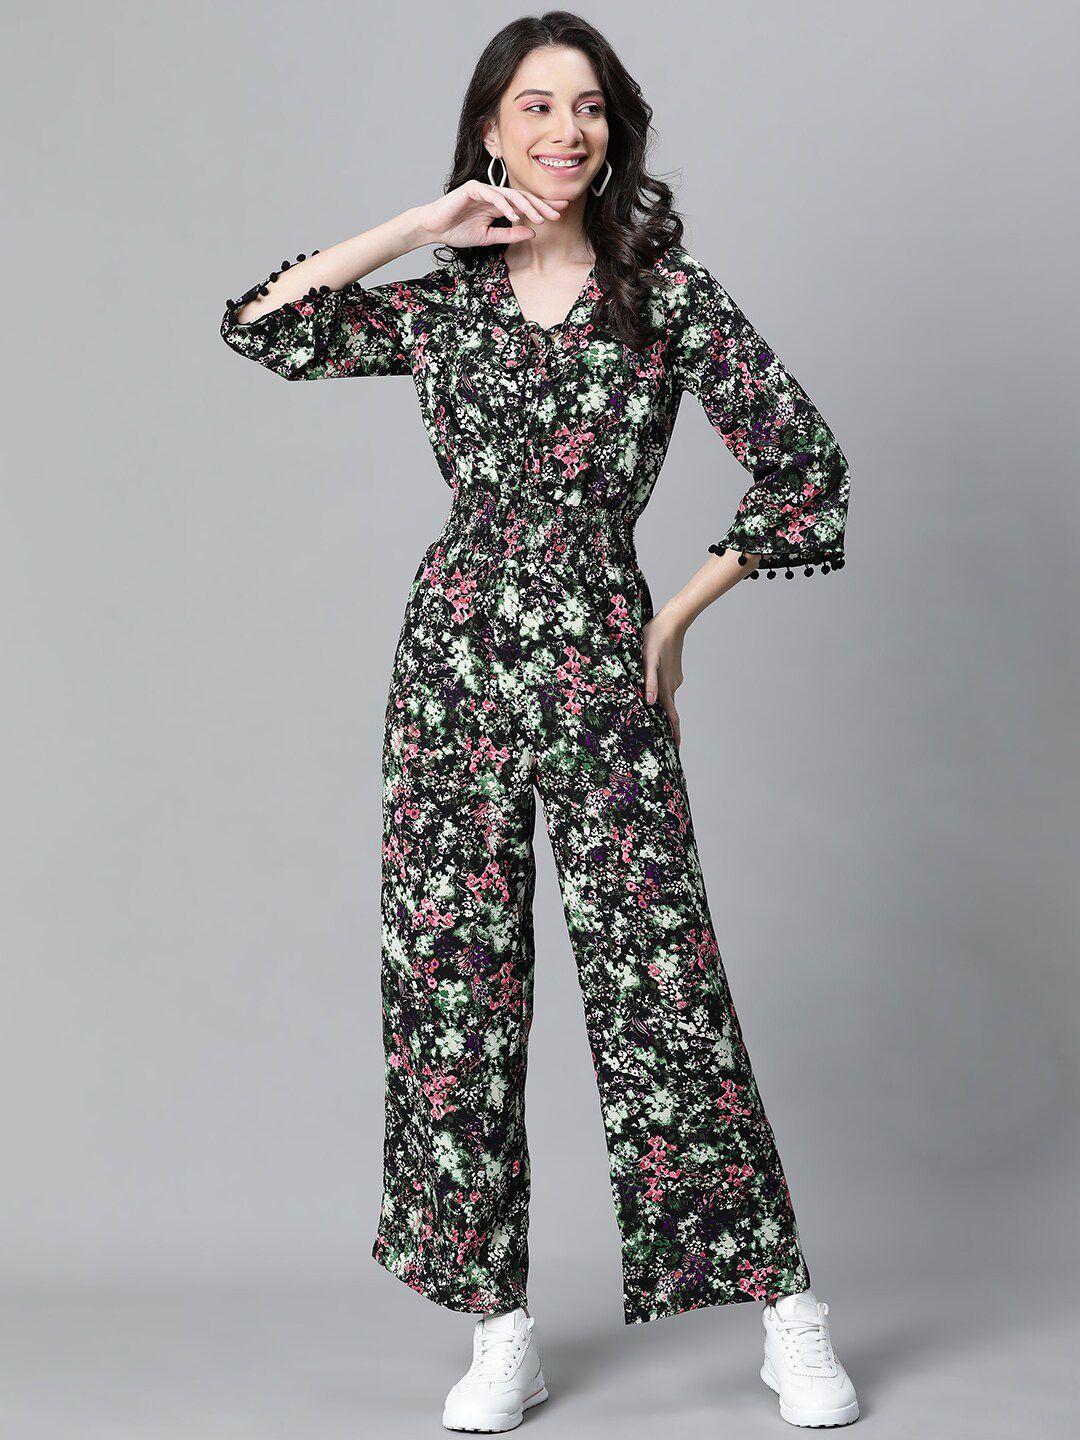 oxolloxo floral printed v-neck pom pom lace smocked jumpsuit